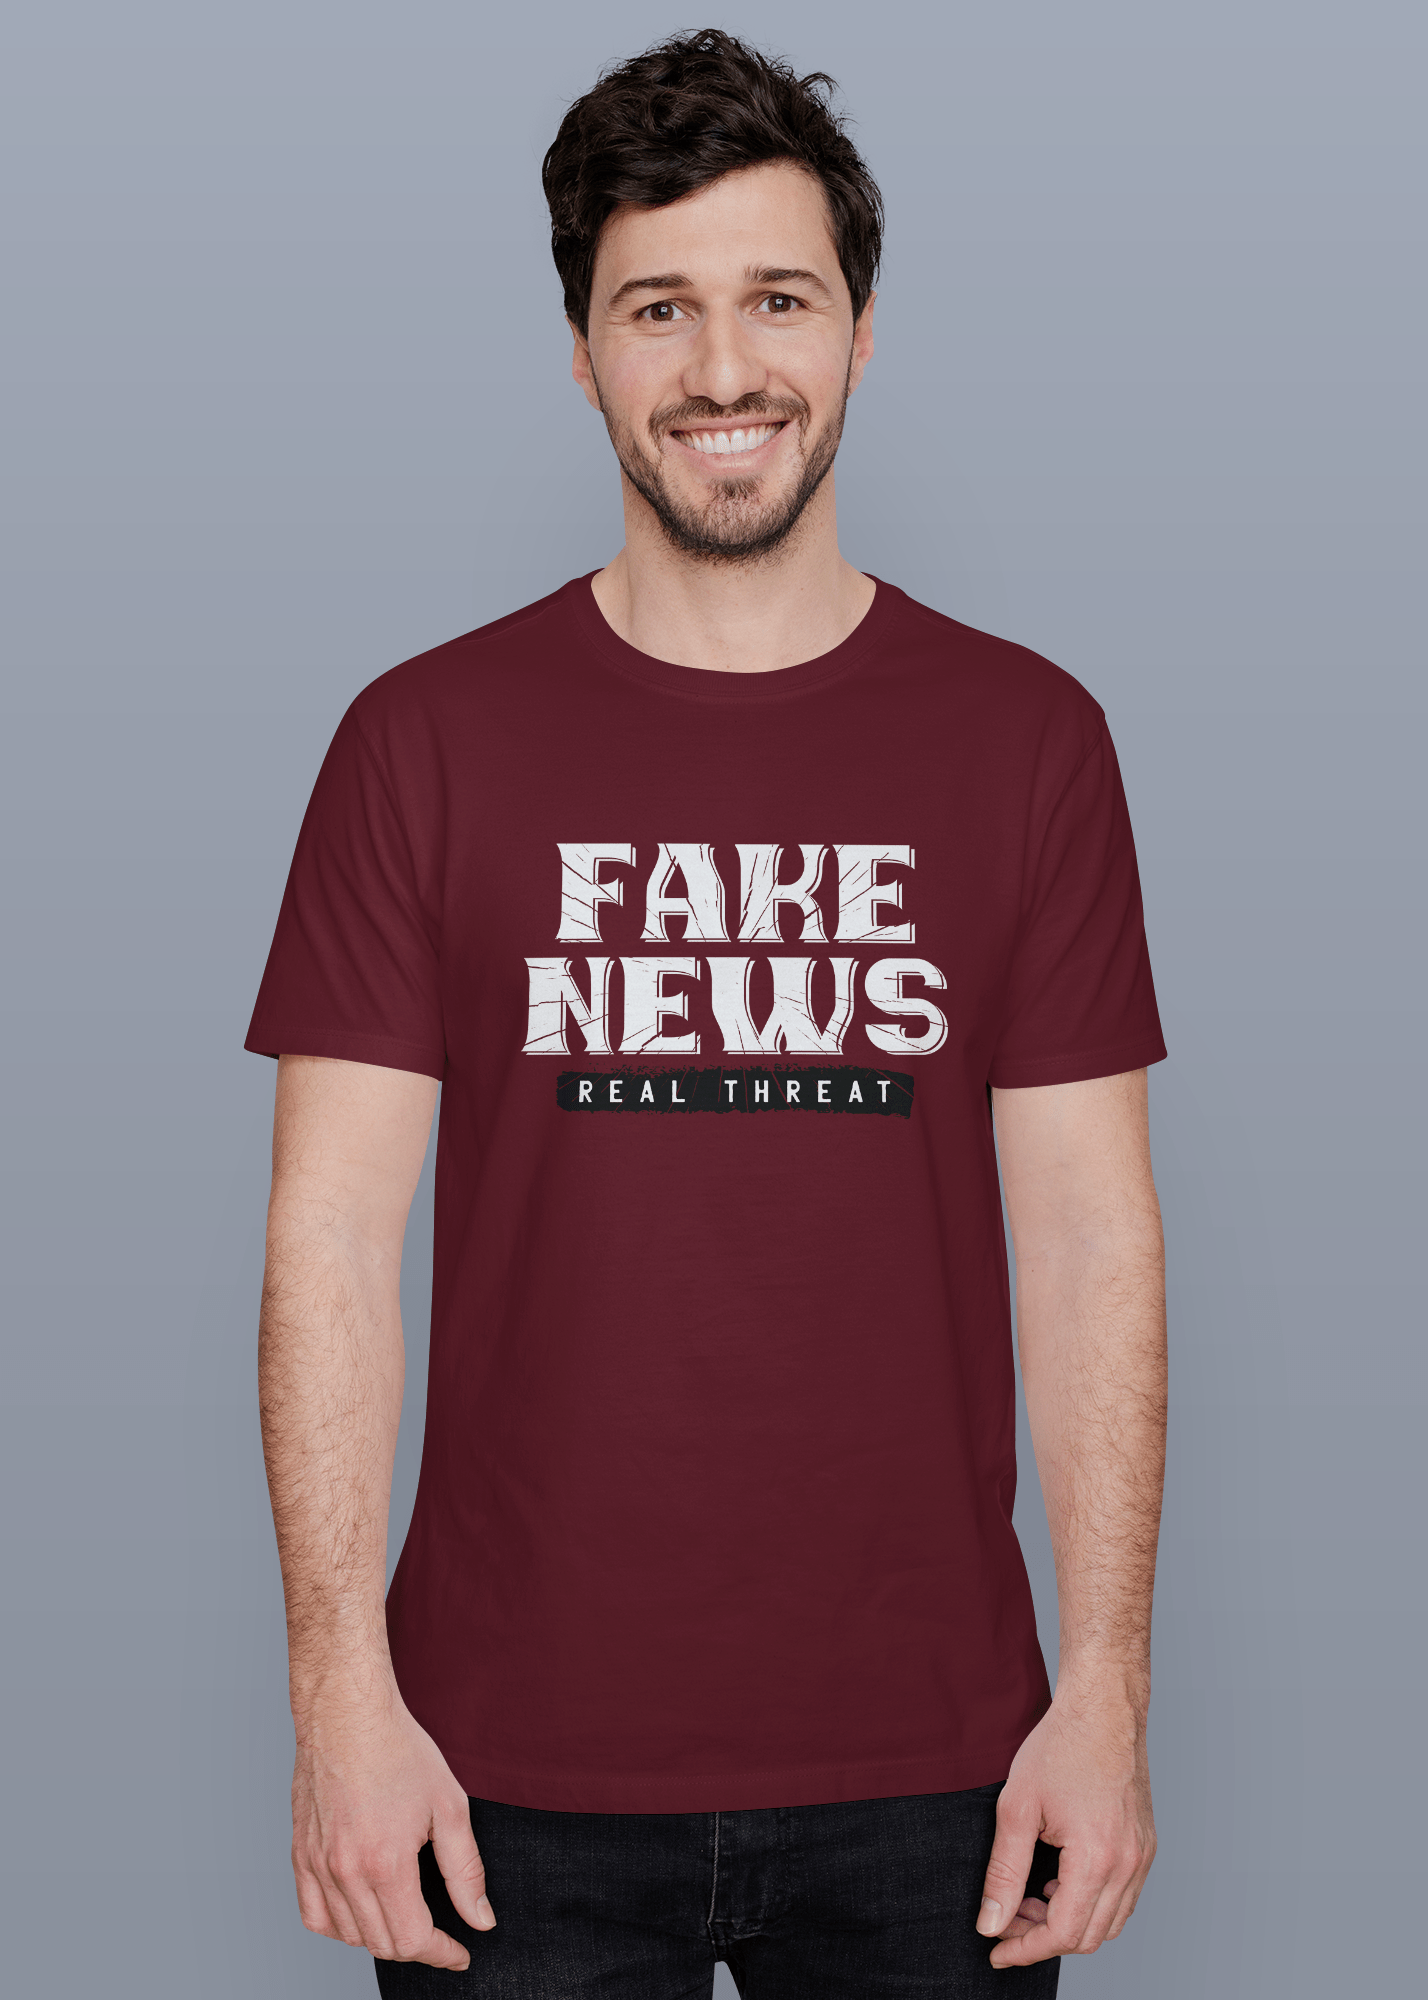 Fake News Alert Printed Half Sleeve Premium Cotton T-shirt For Men